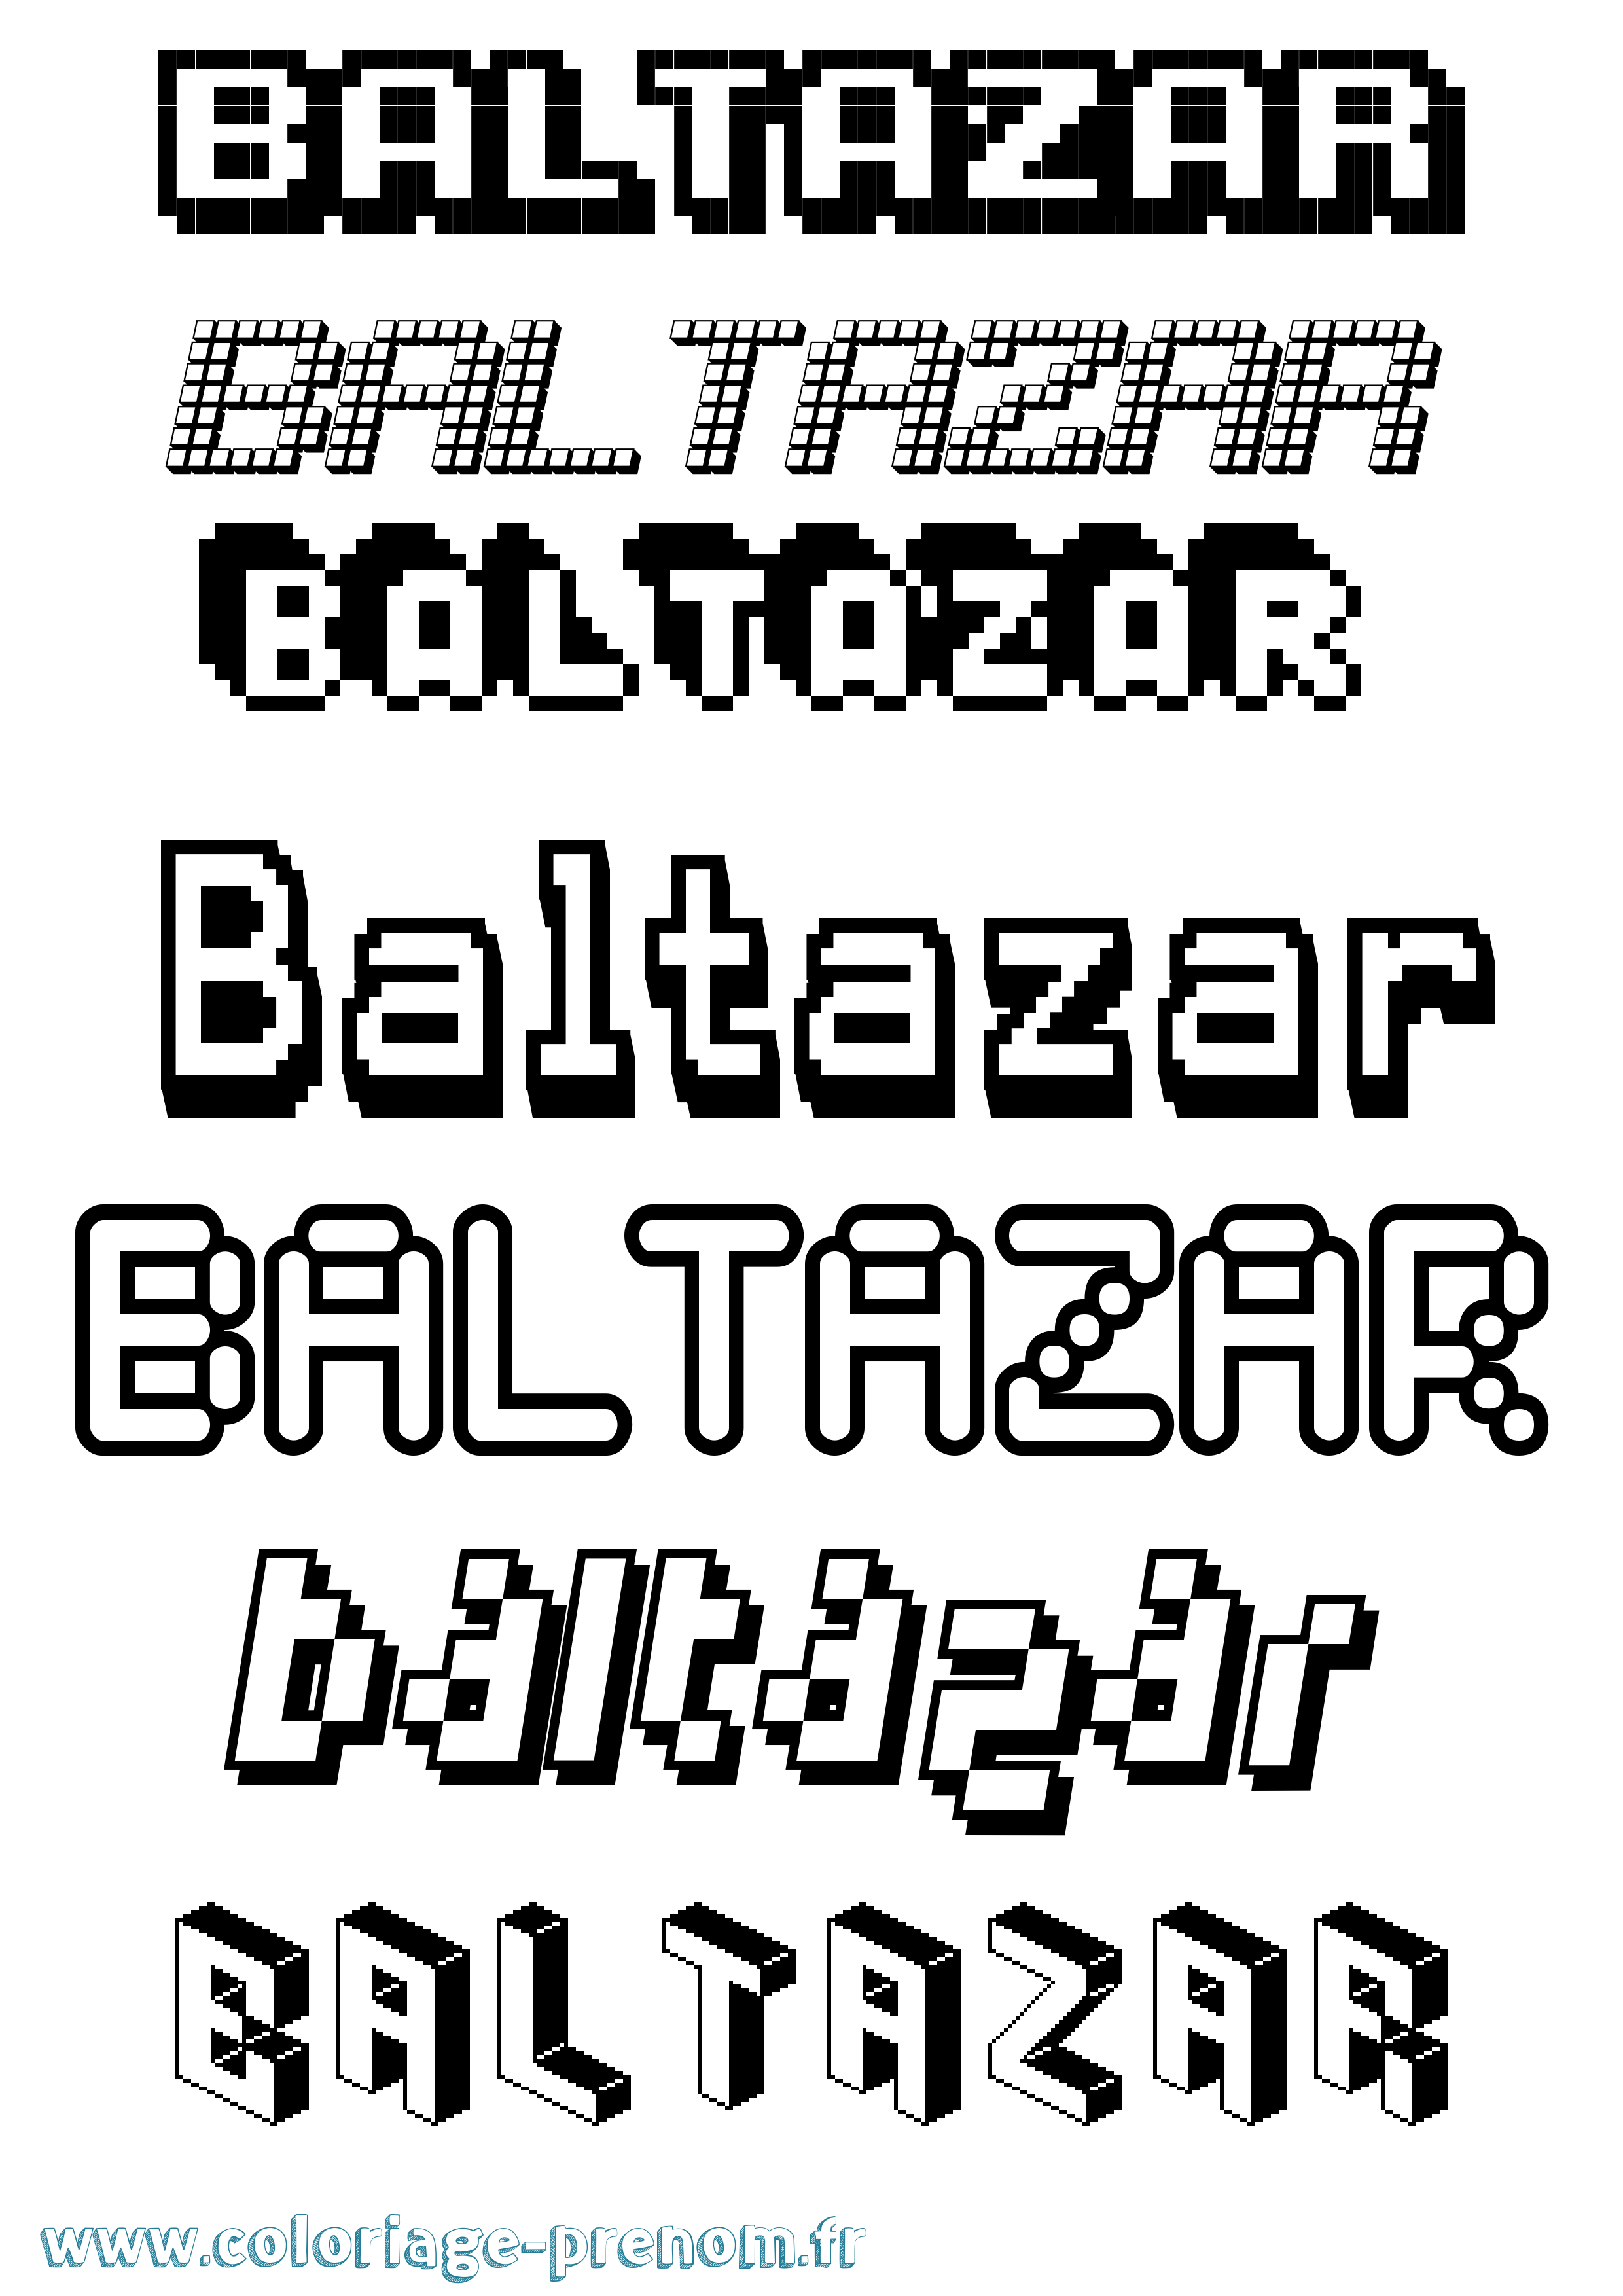 Coloriage prénom Baltazar Pixel